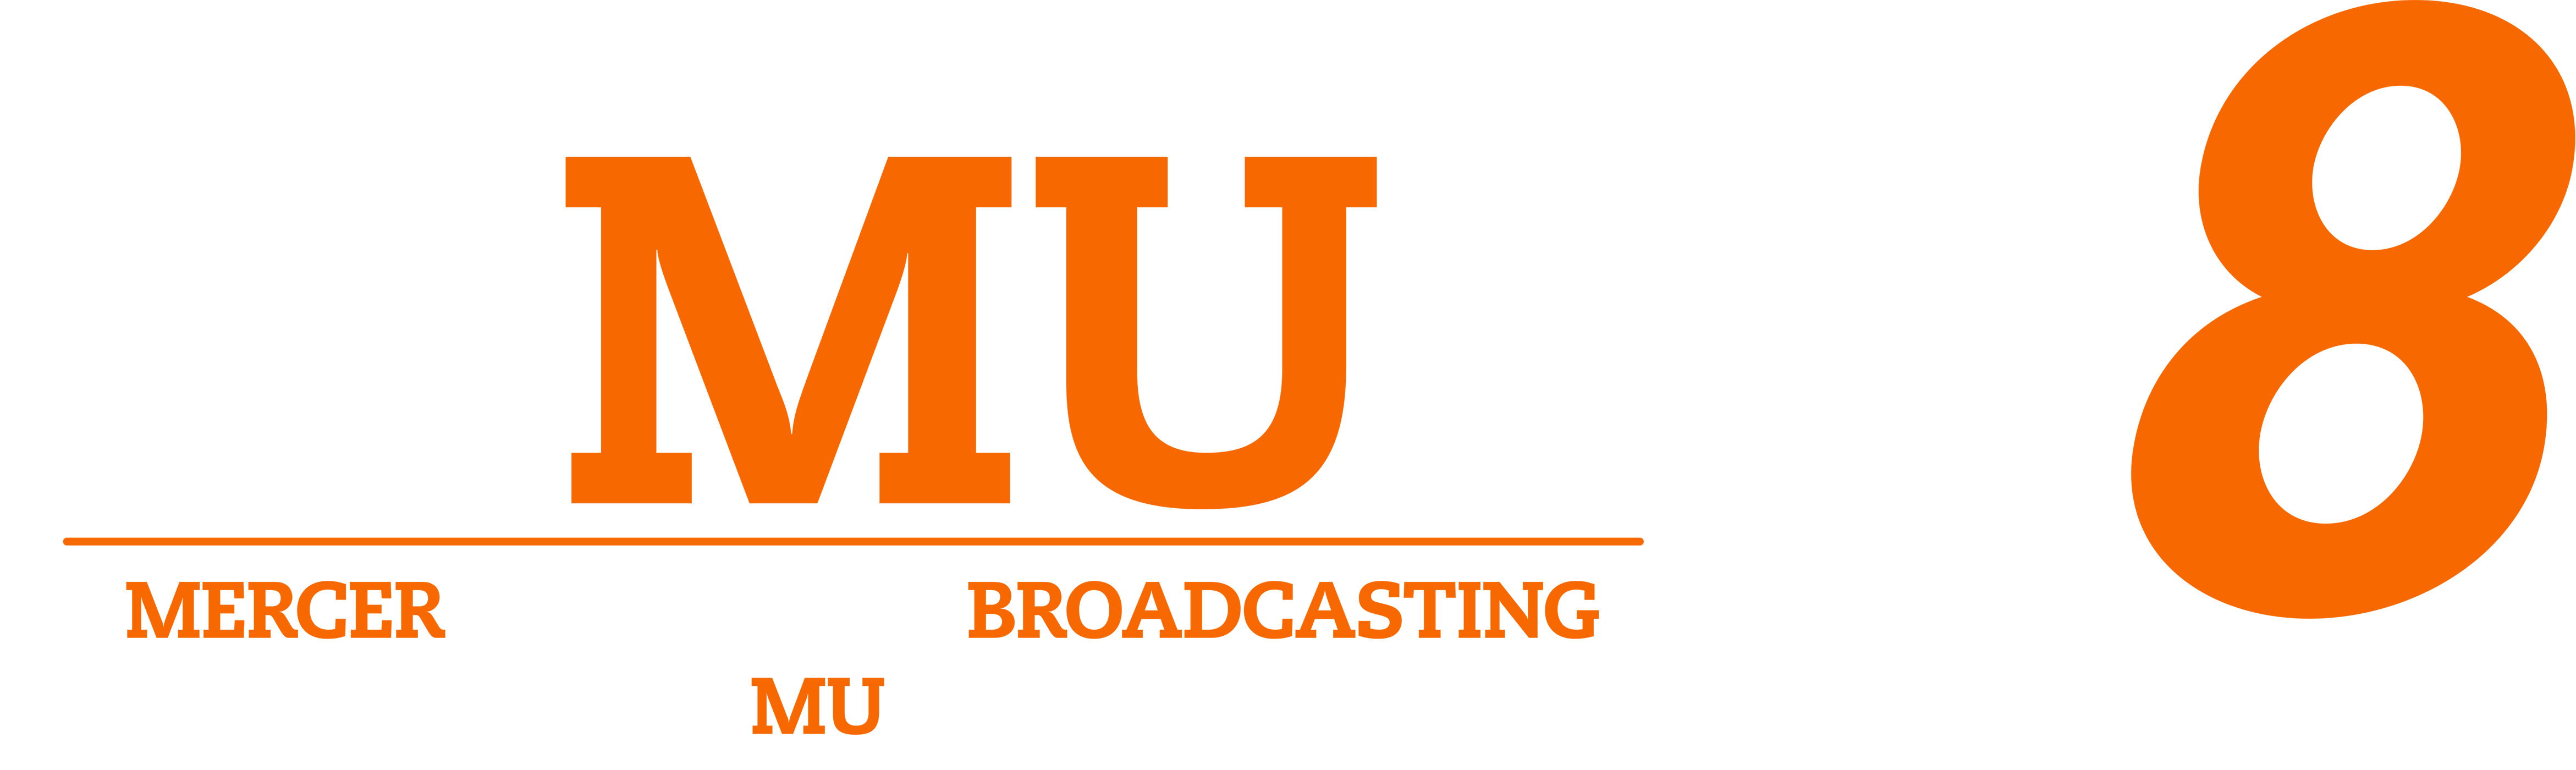 WMUB 38 Mercer University Broadcasting WMUB.TV